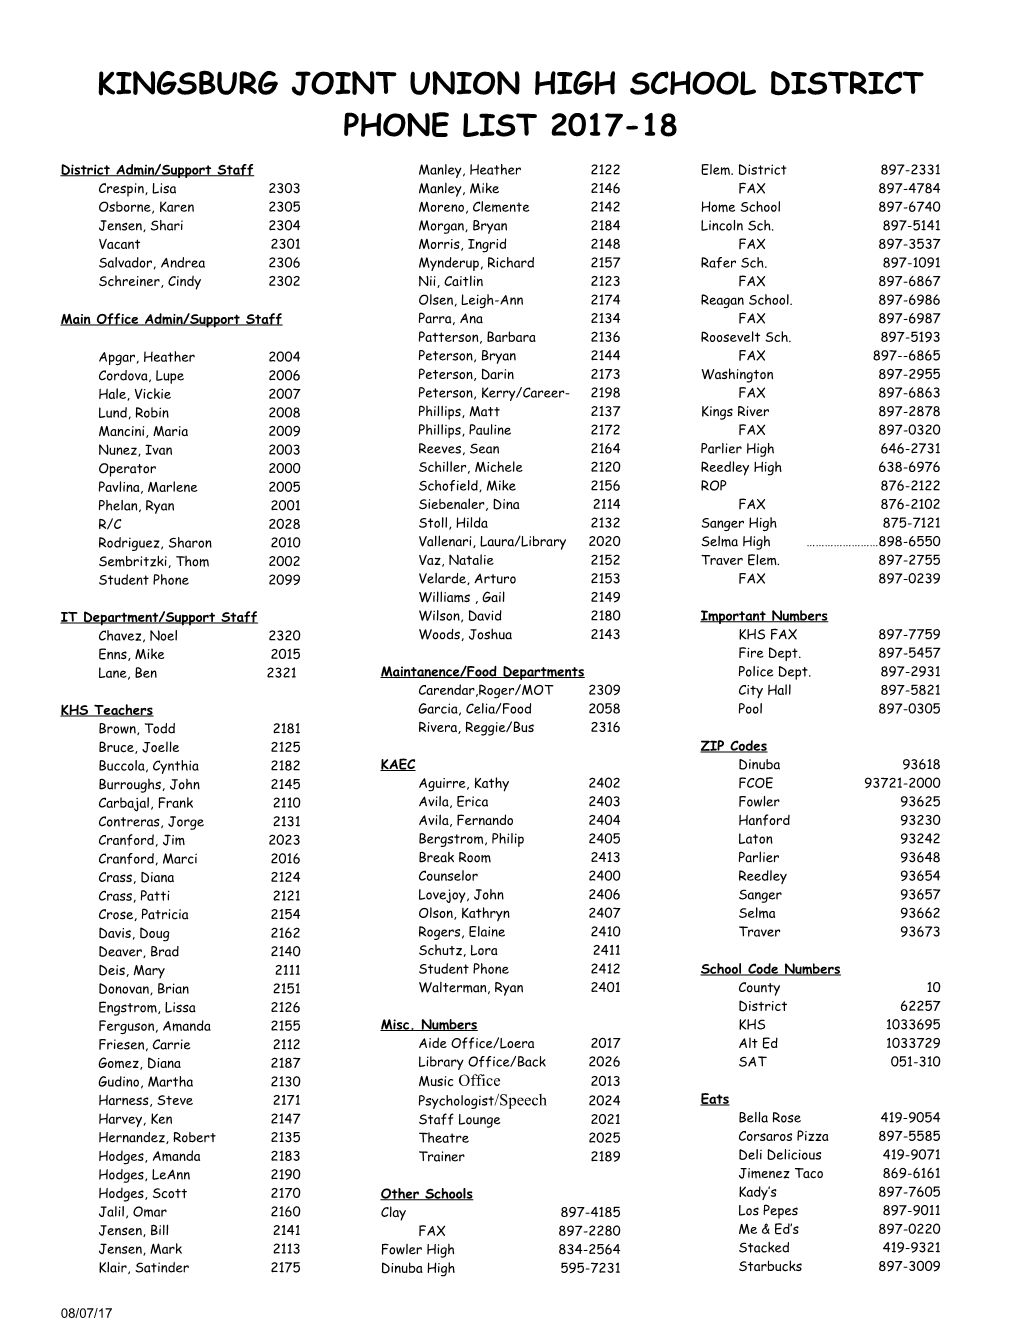 Kingsburg Joint Union High School District Phone List 2017-18